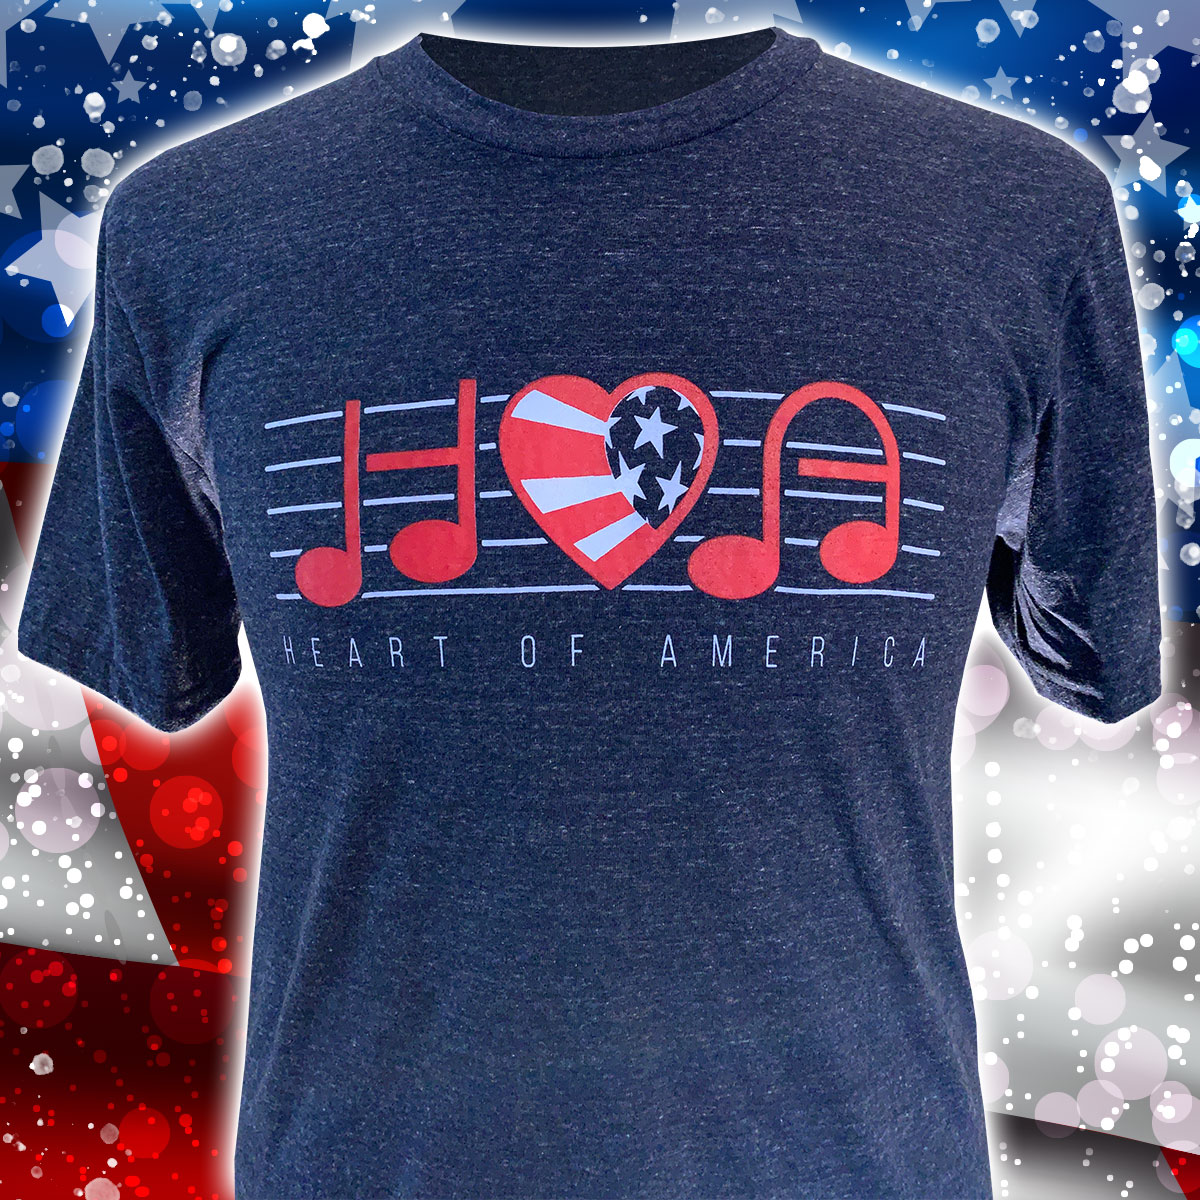 The Original Heart of America T-Shirt